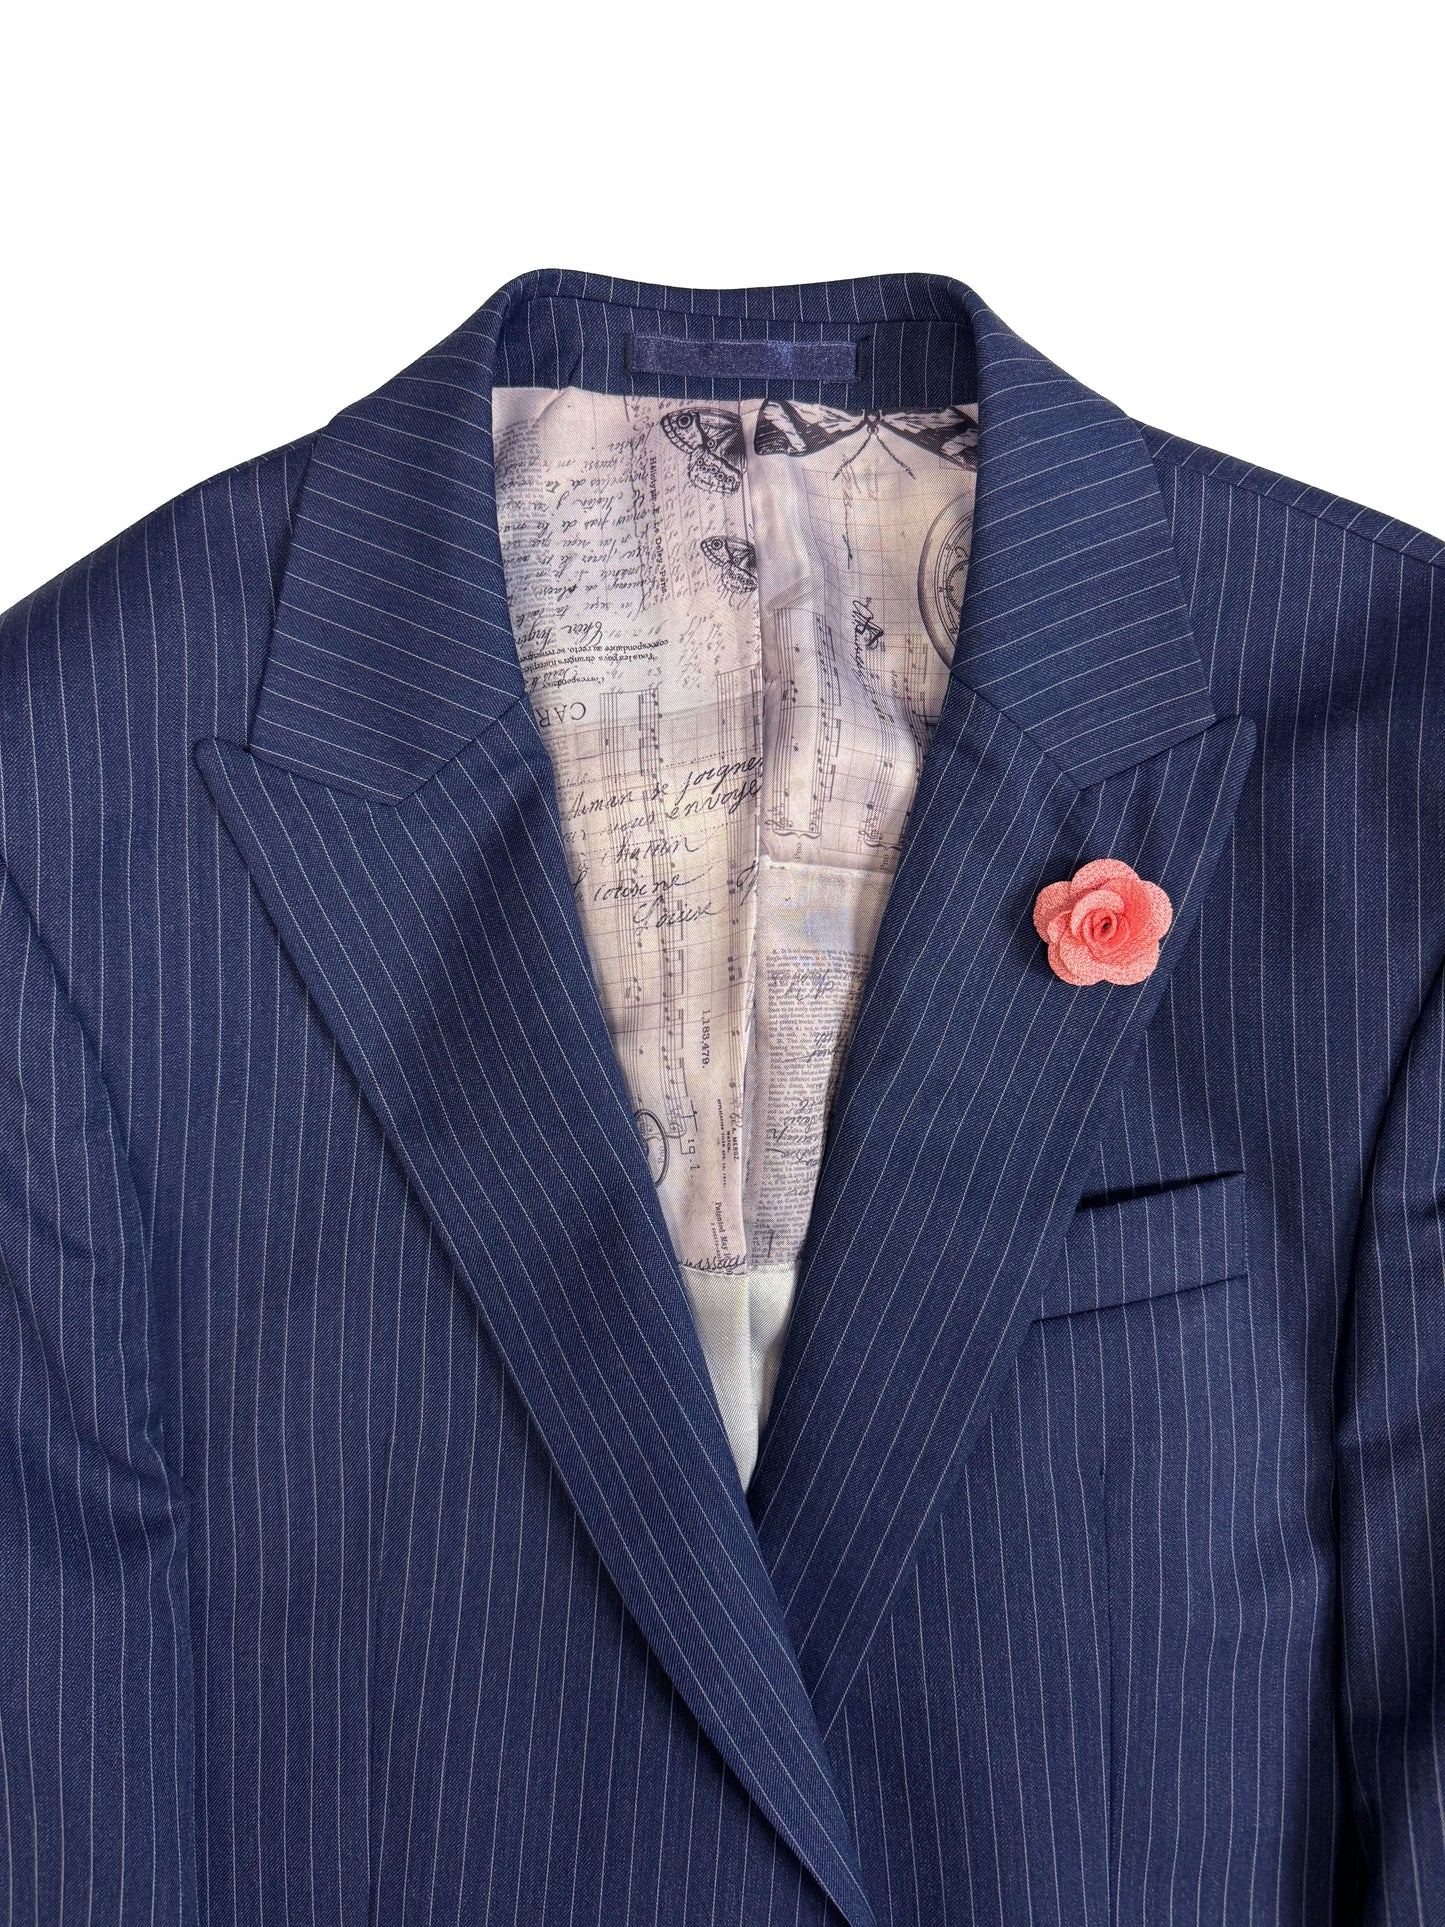 Men's Pinstripe Suit Jacket Navy Blue Wool Blazer